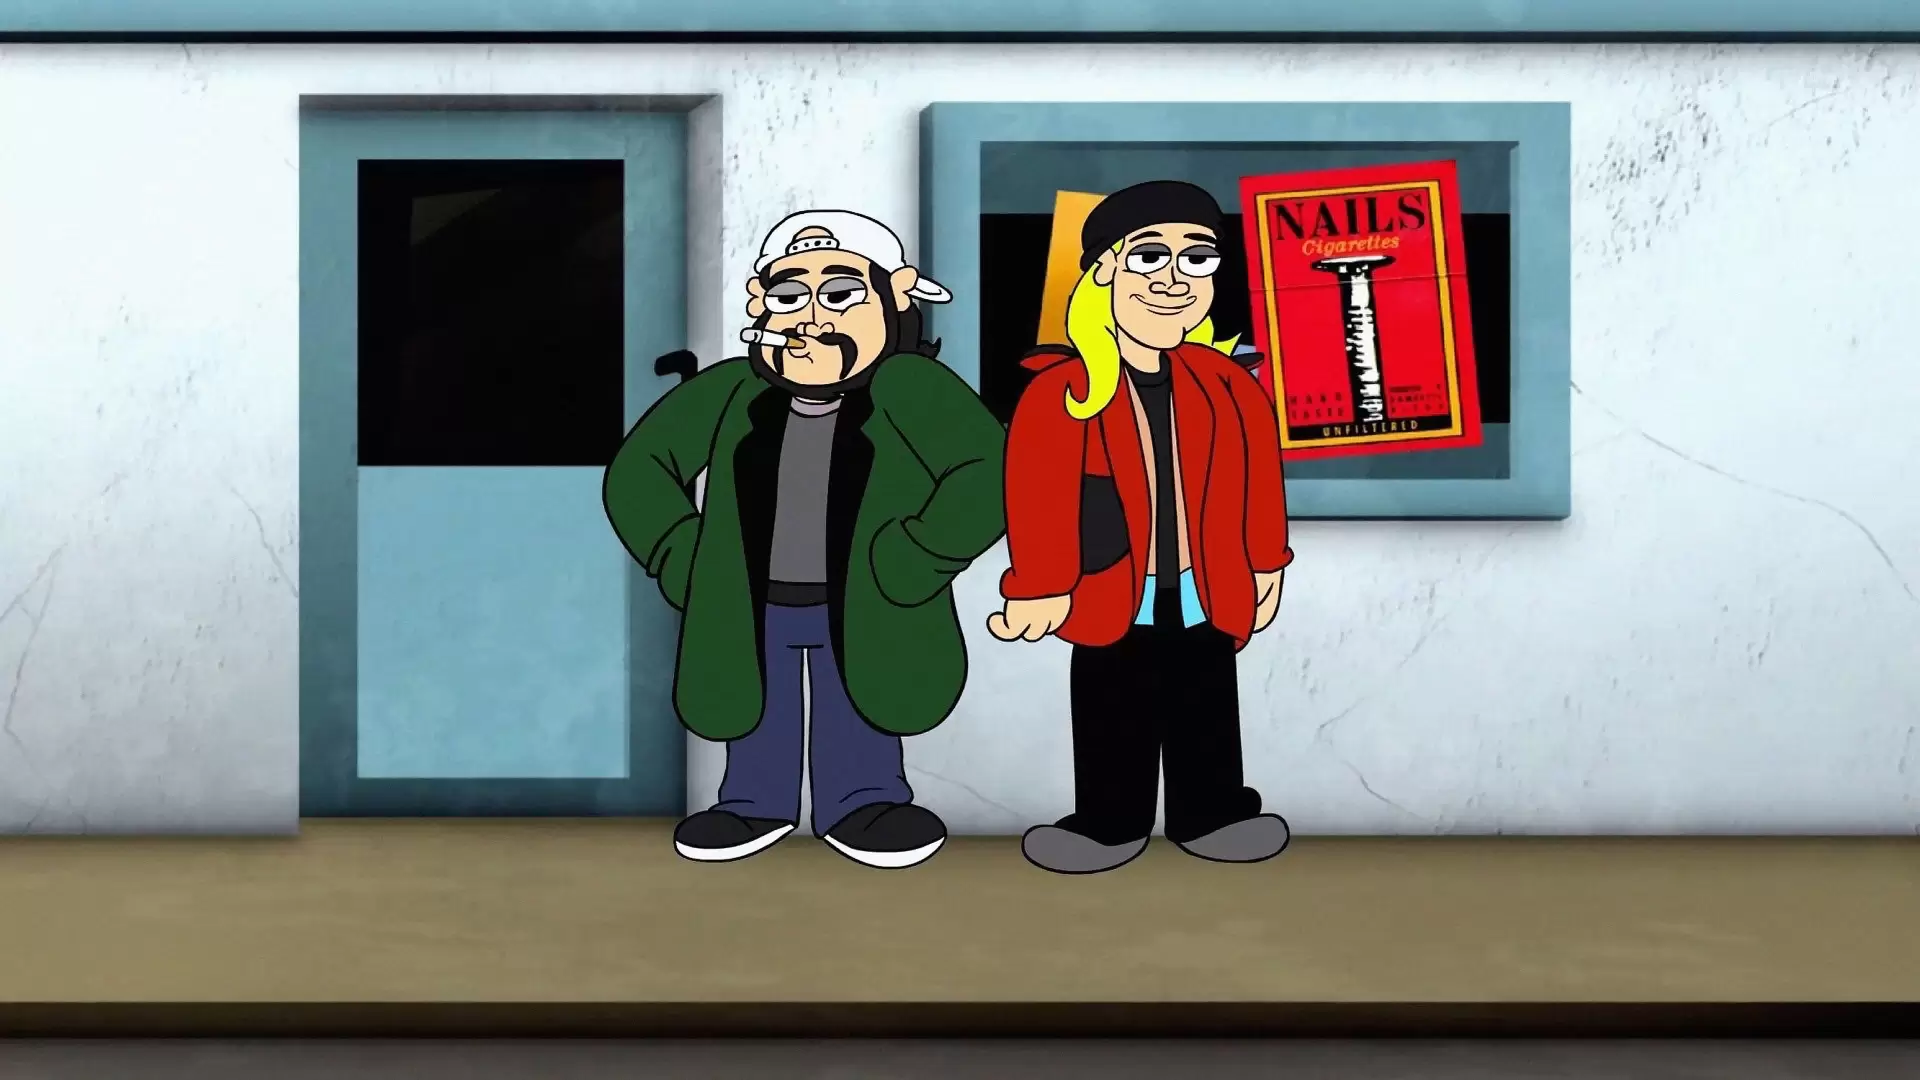 دانلود انیمیشن Jay and Silent Bob’s Super Groovy Cartoon Movie 2013